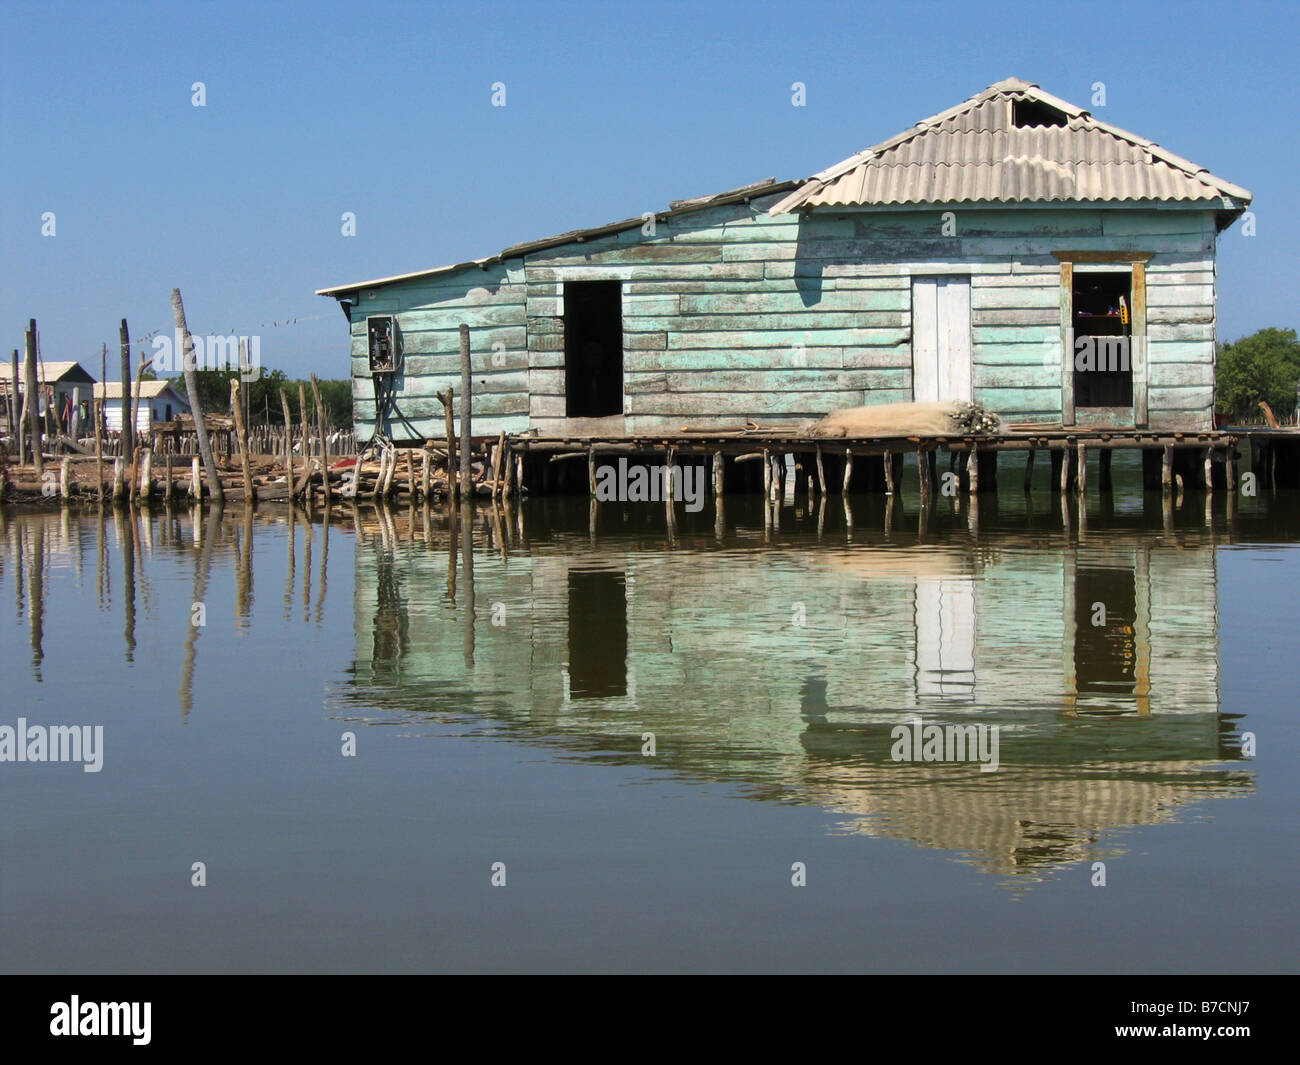 stilt building in the lagoon Cinaga Grande de Santa, Colombia, Cinaga Grande de Santa Stock Photo